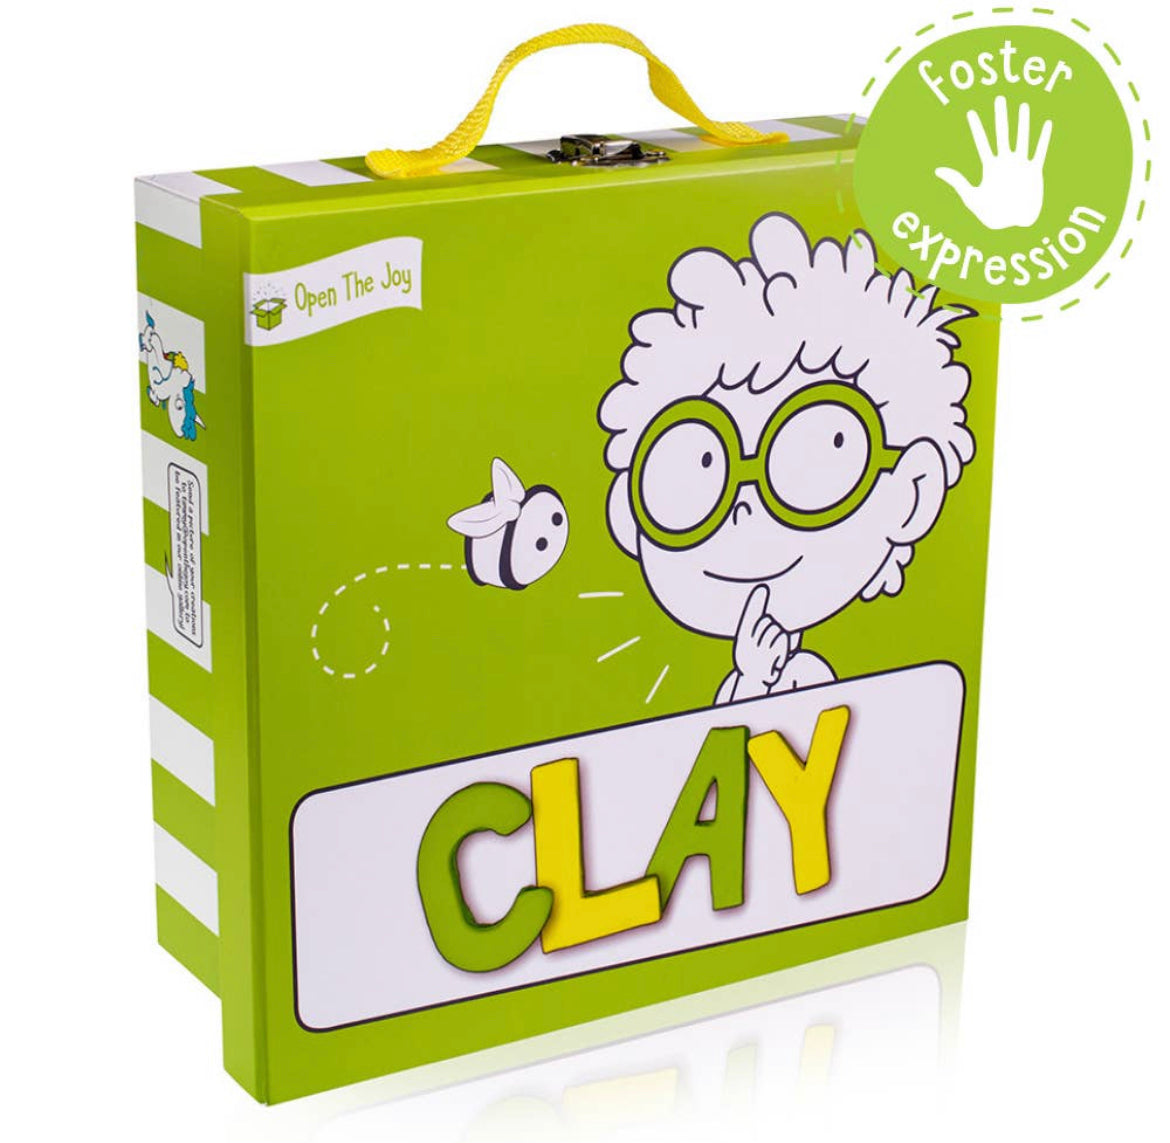 Open the joy: Clay kit